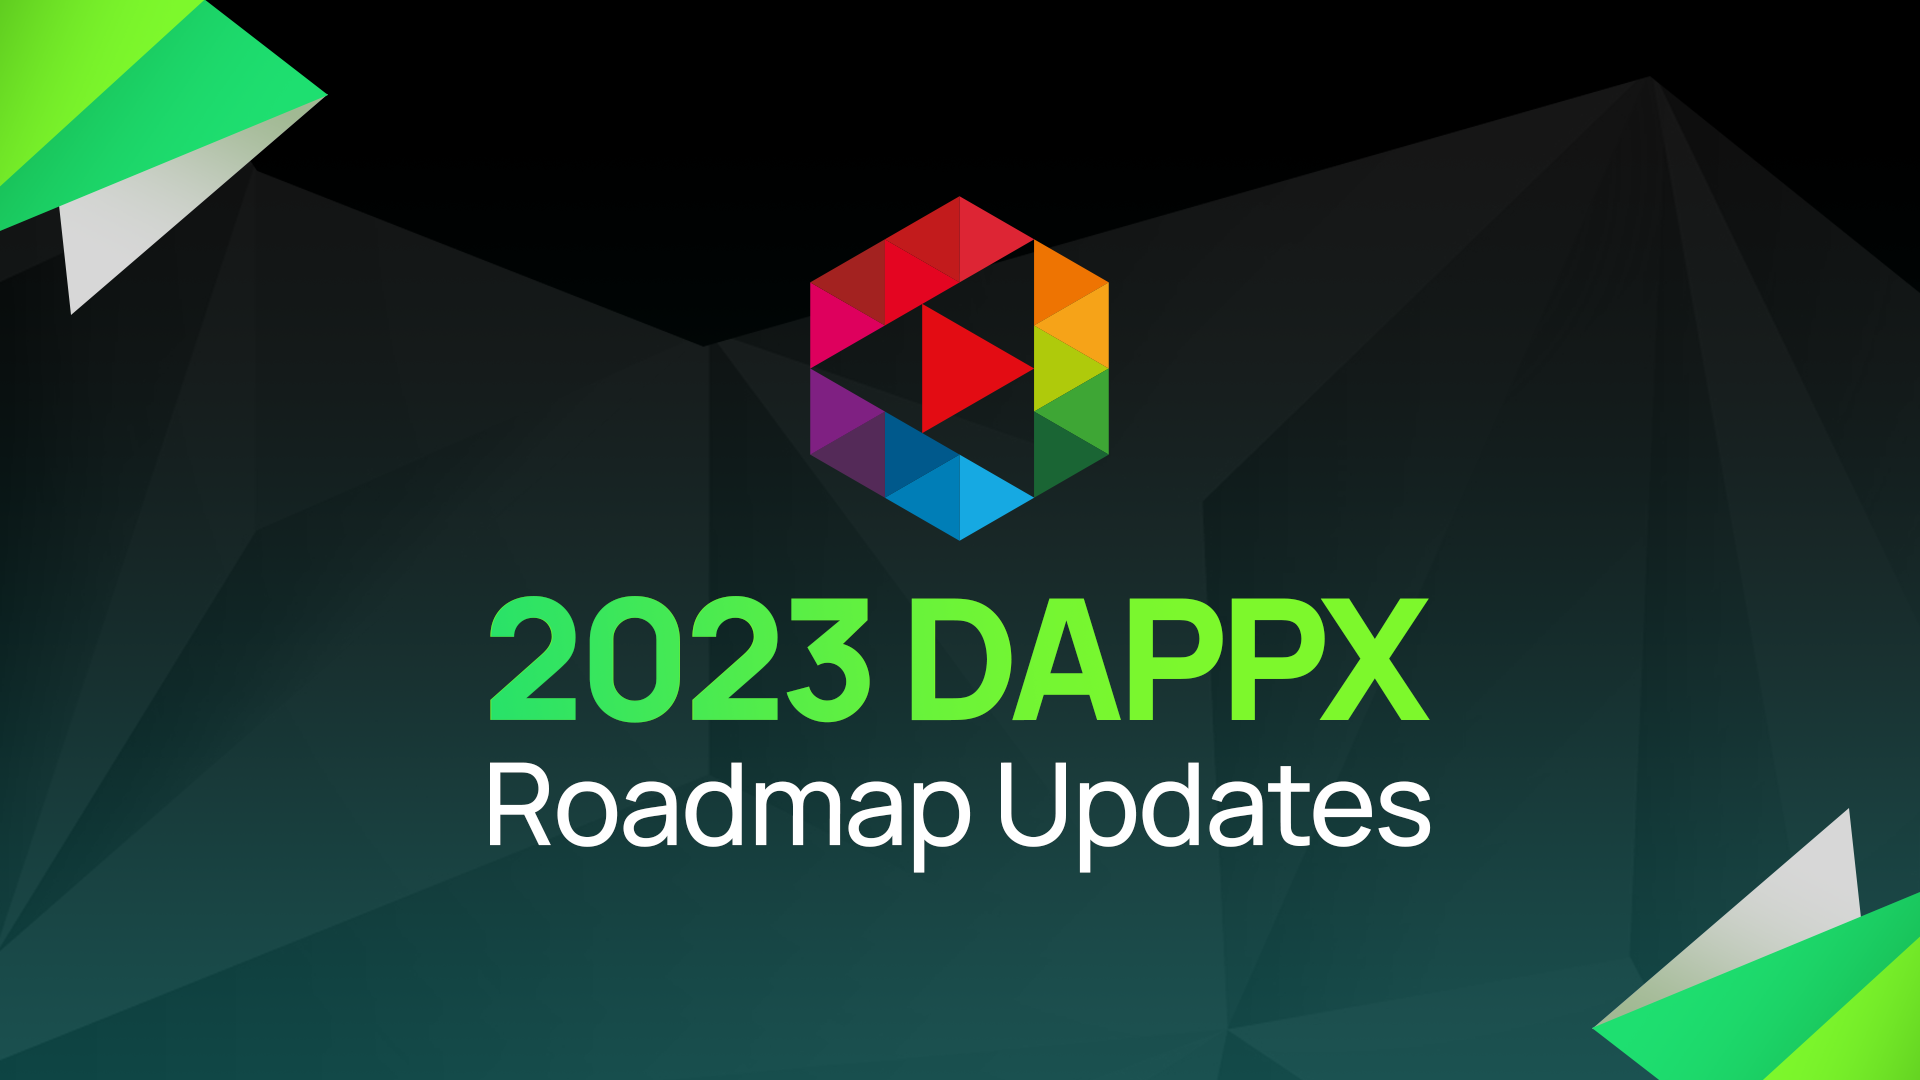 2023 DAPPX Roadmap Updates